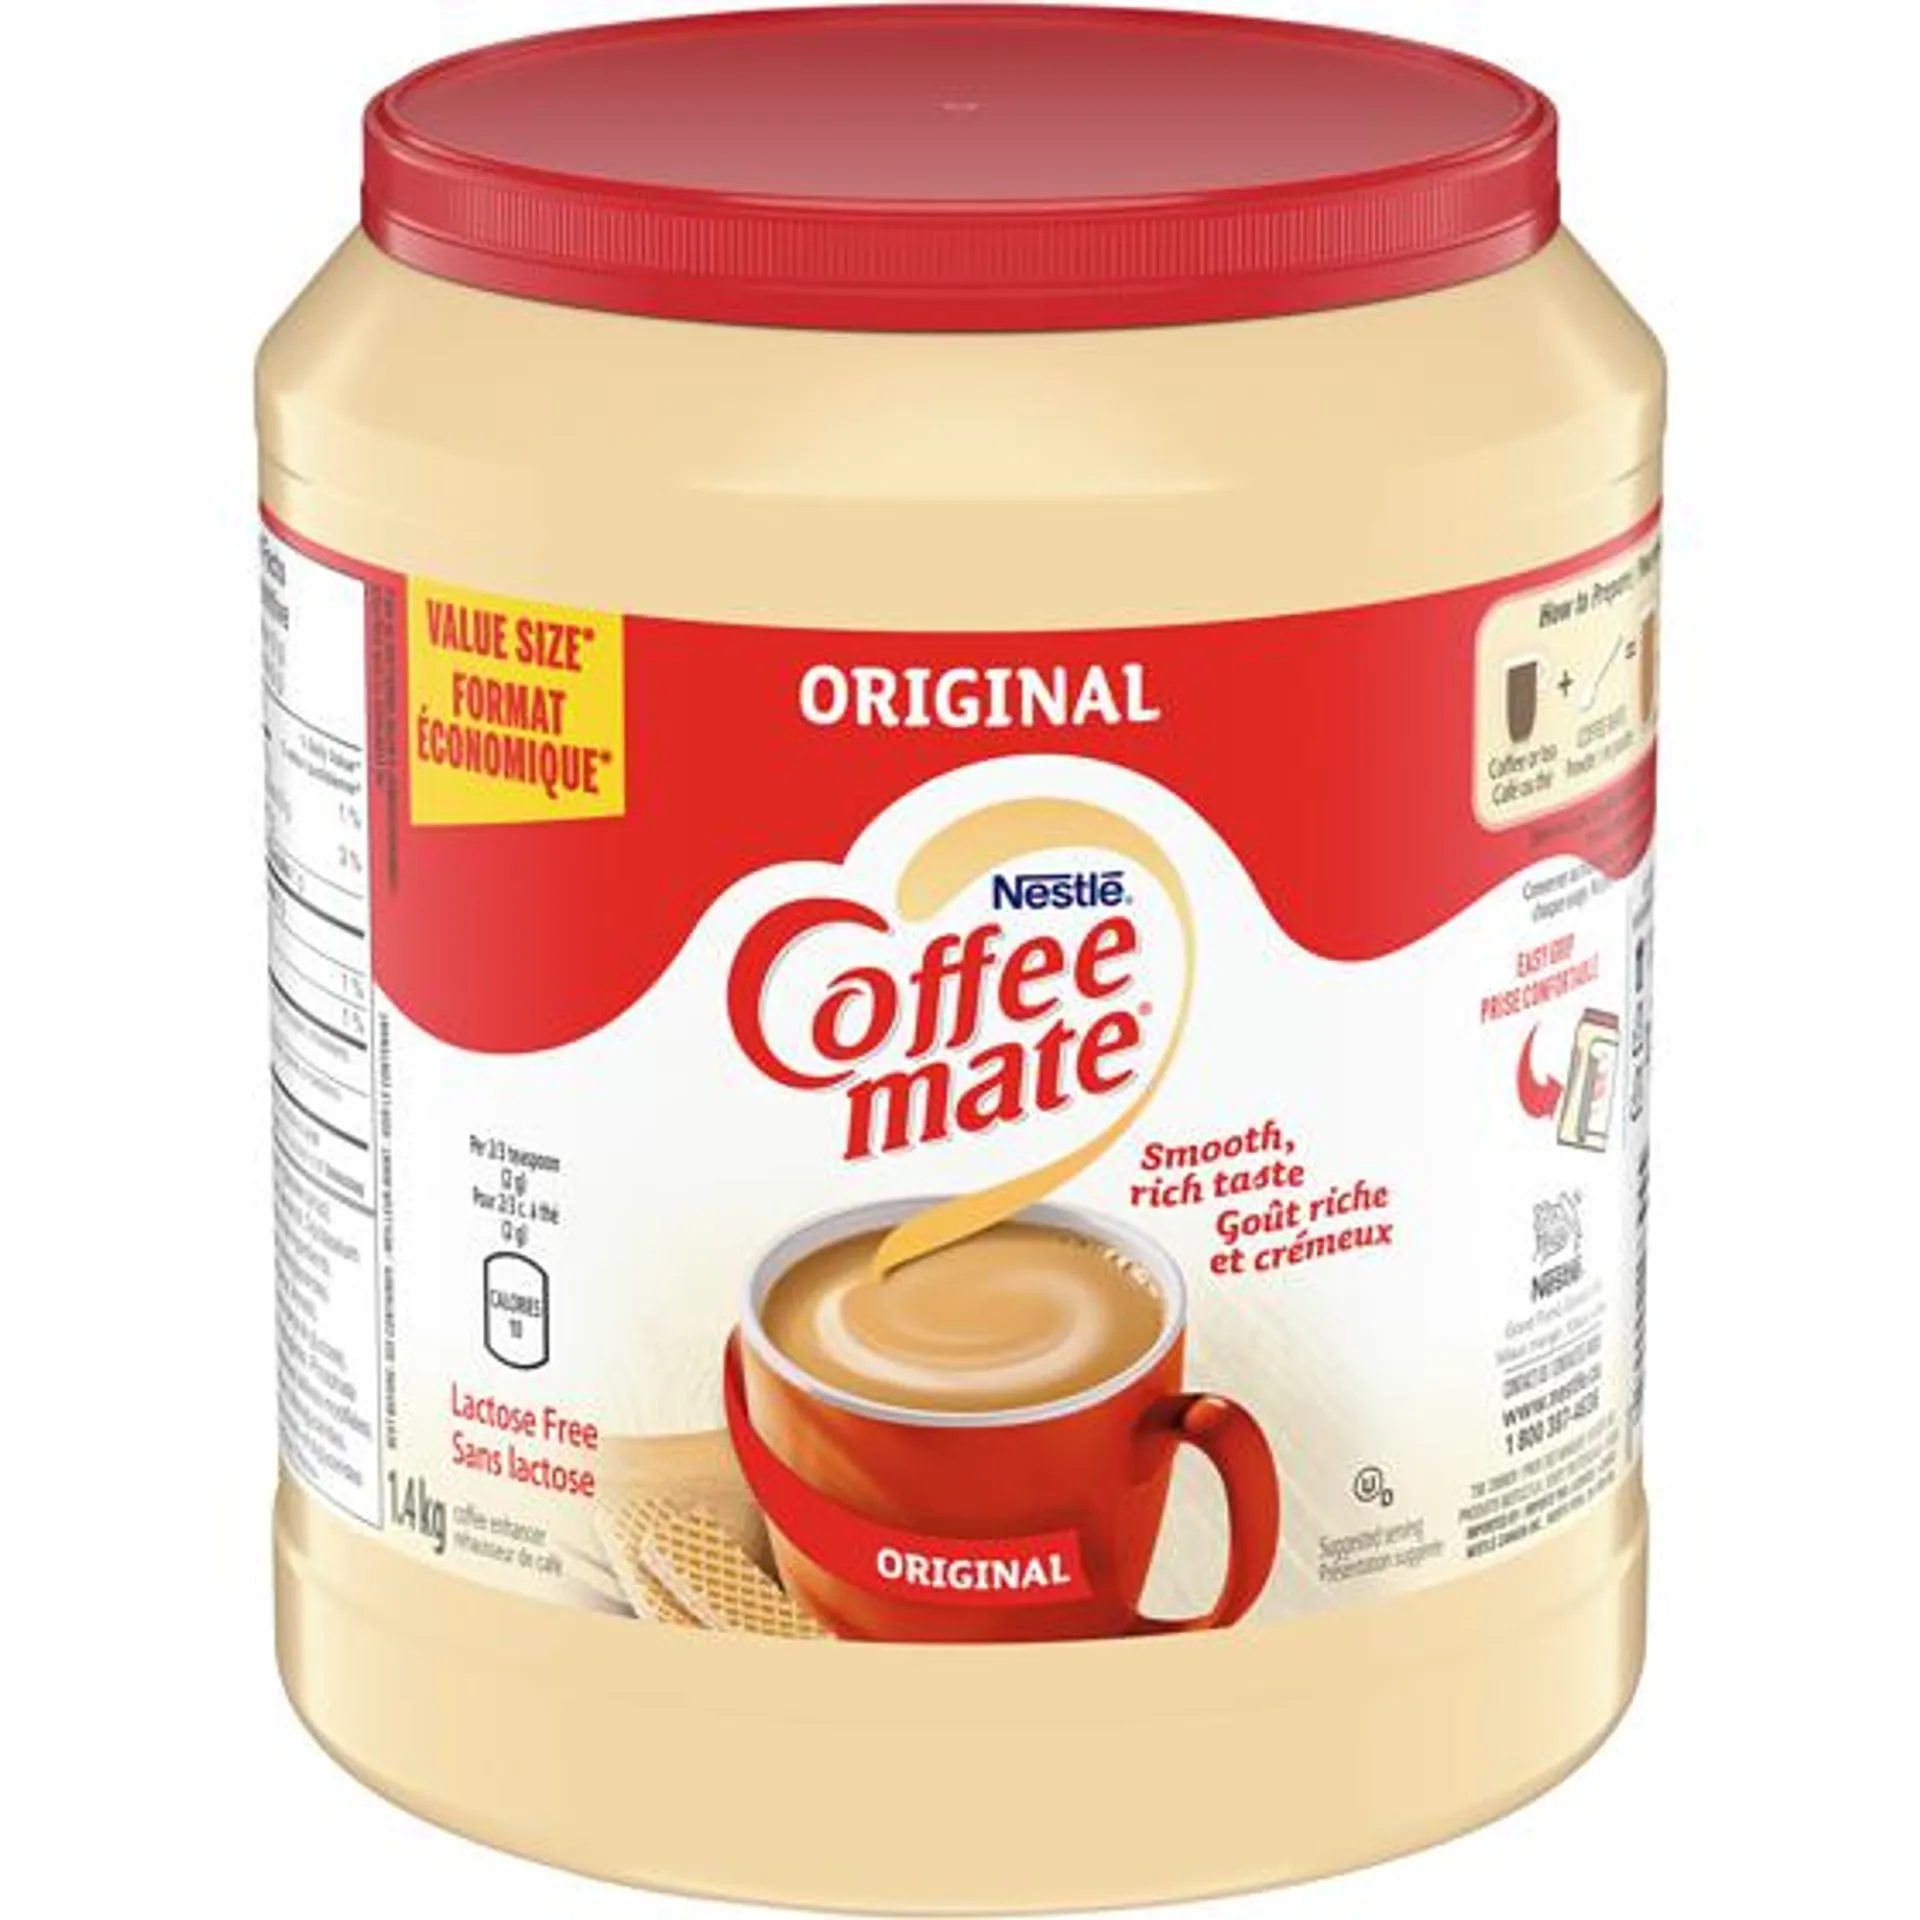 Coffee-mate original